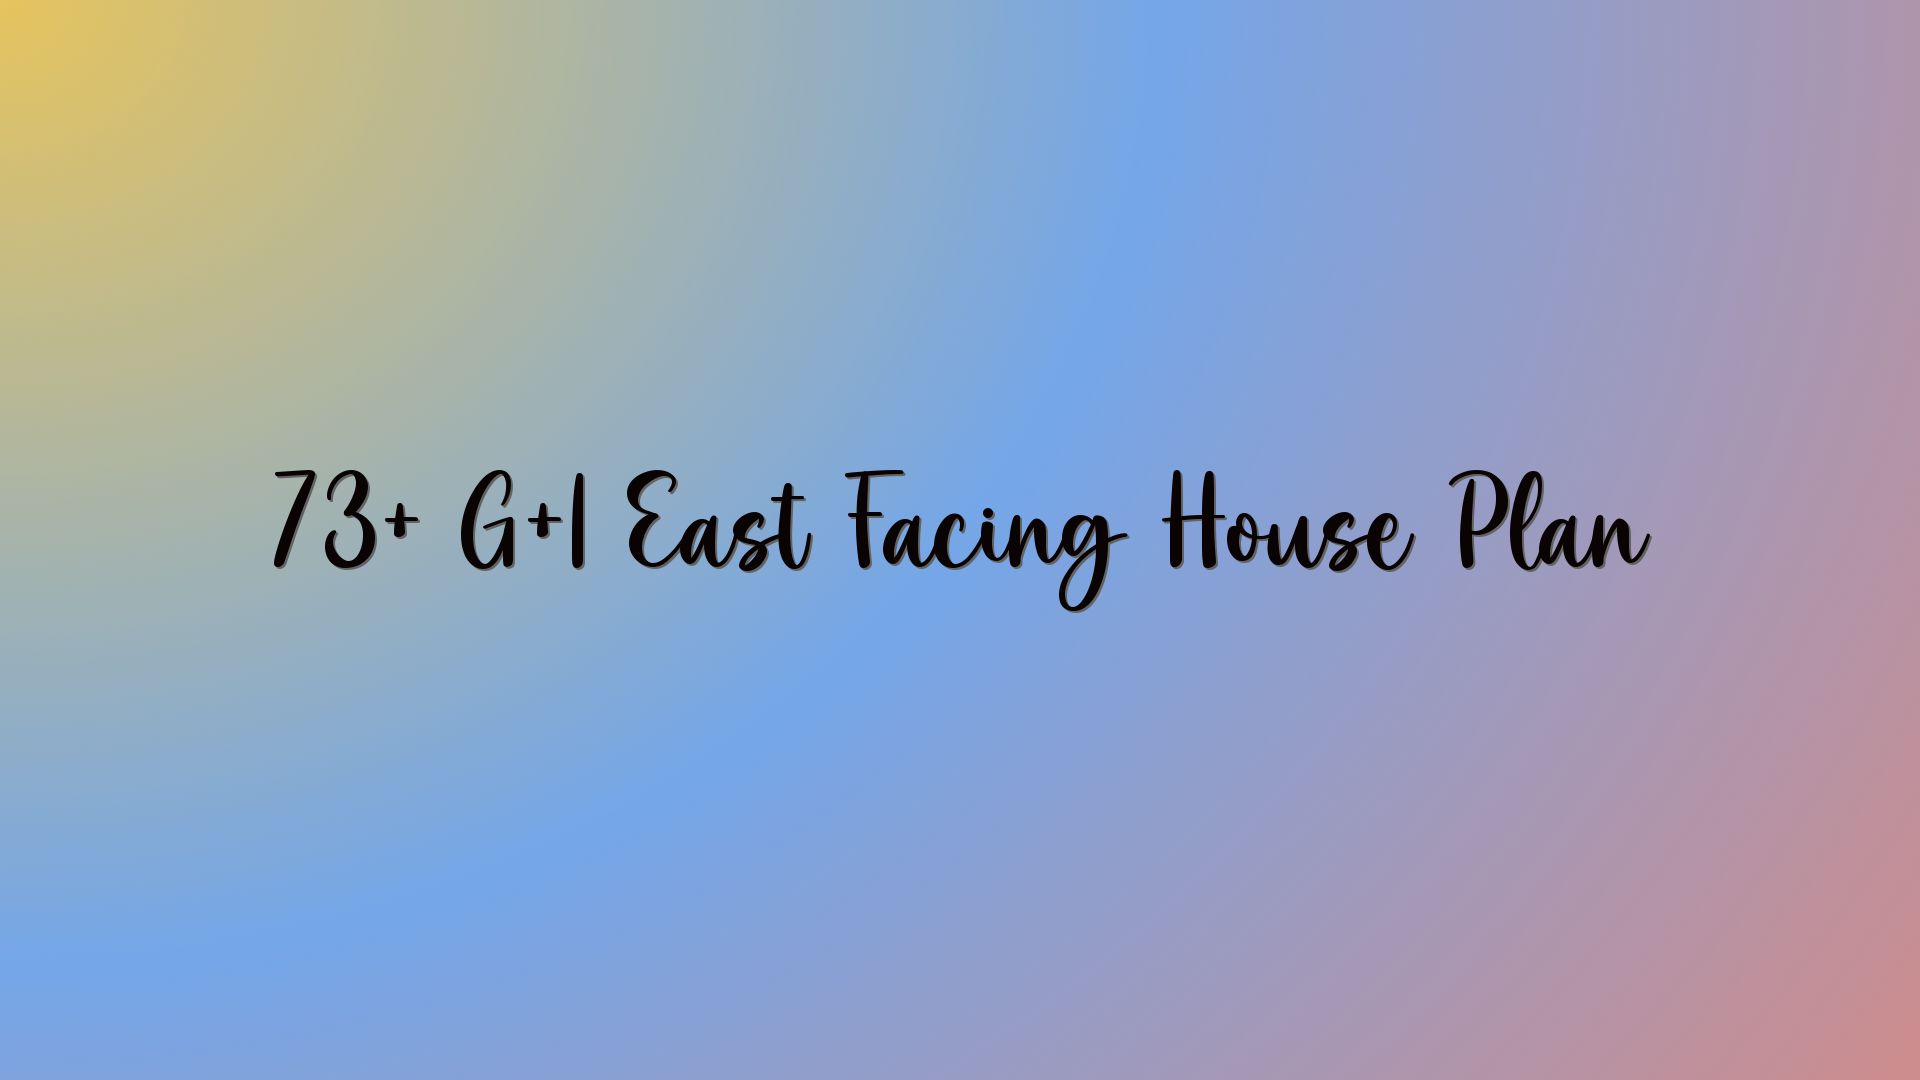 73+ G+1 East Facing House Plan